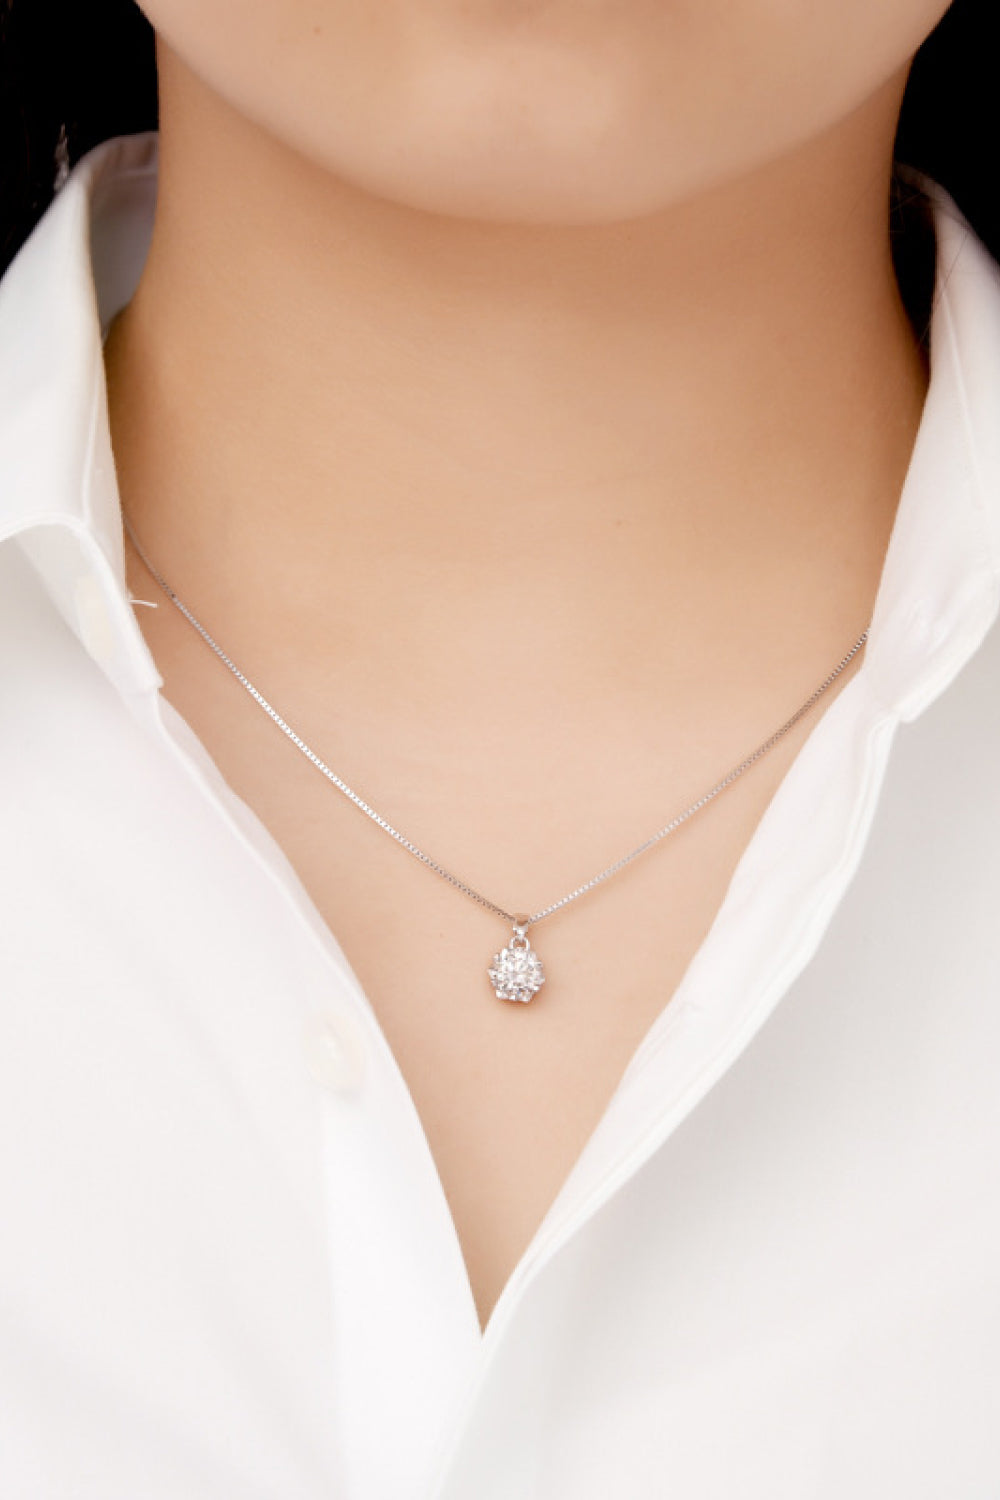 1 Carat Moissanite Pendant Platinum-Plated Necklace Ti Amo I love you